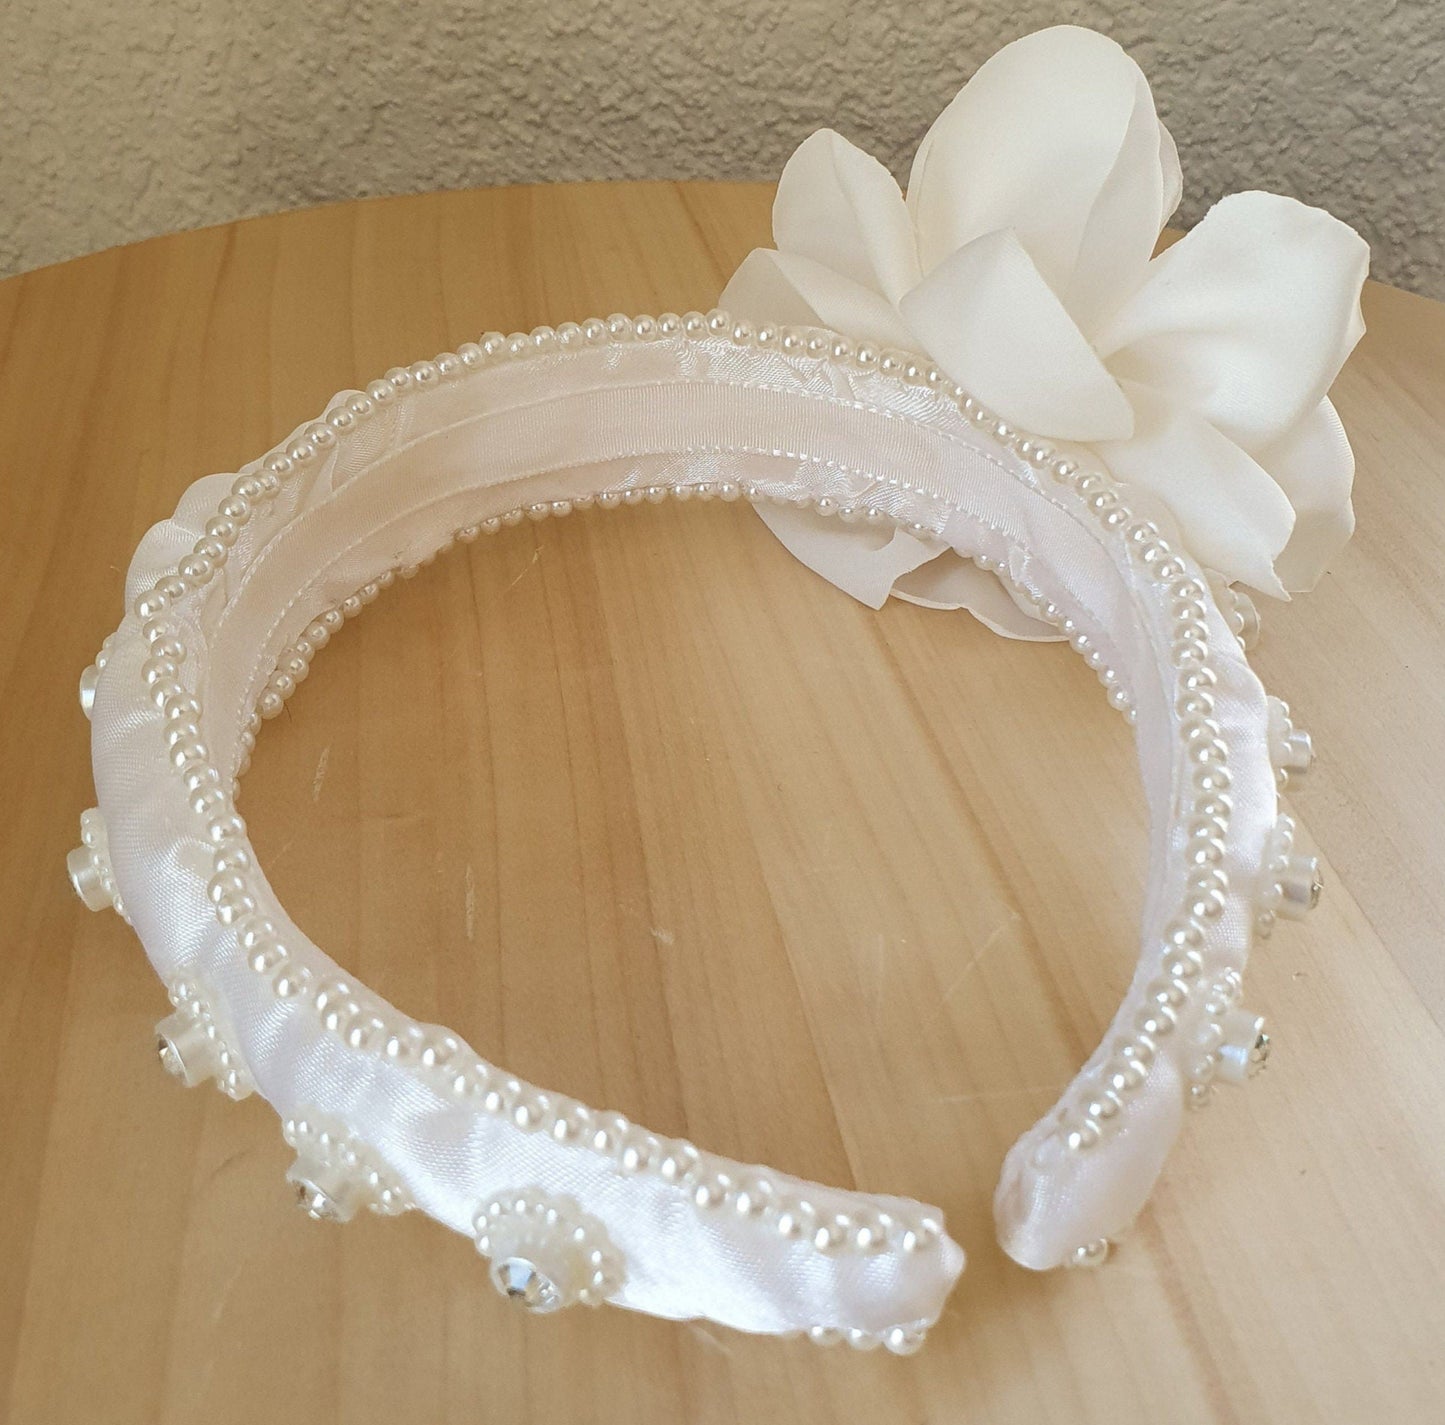 Handmade headband with pearls and silk fabric- Beautiful headband, unique festive diadem, wedding, special occasion